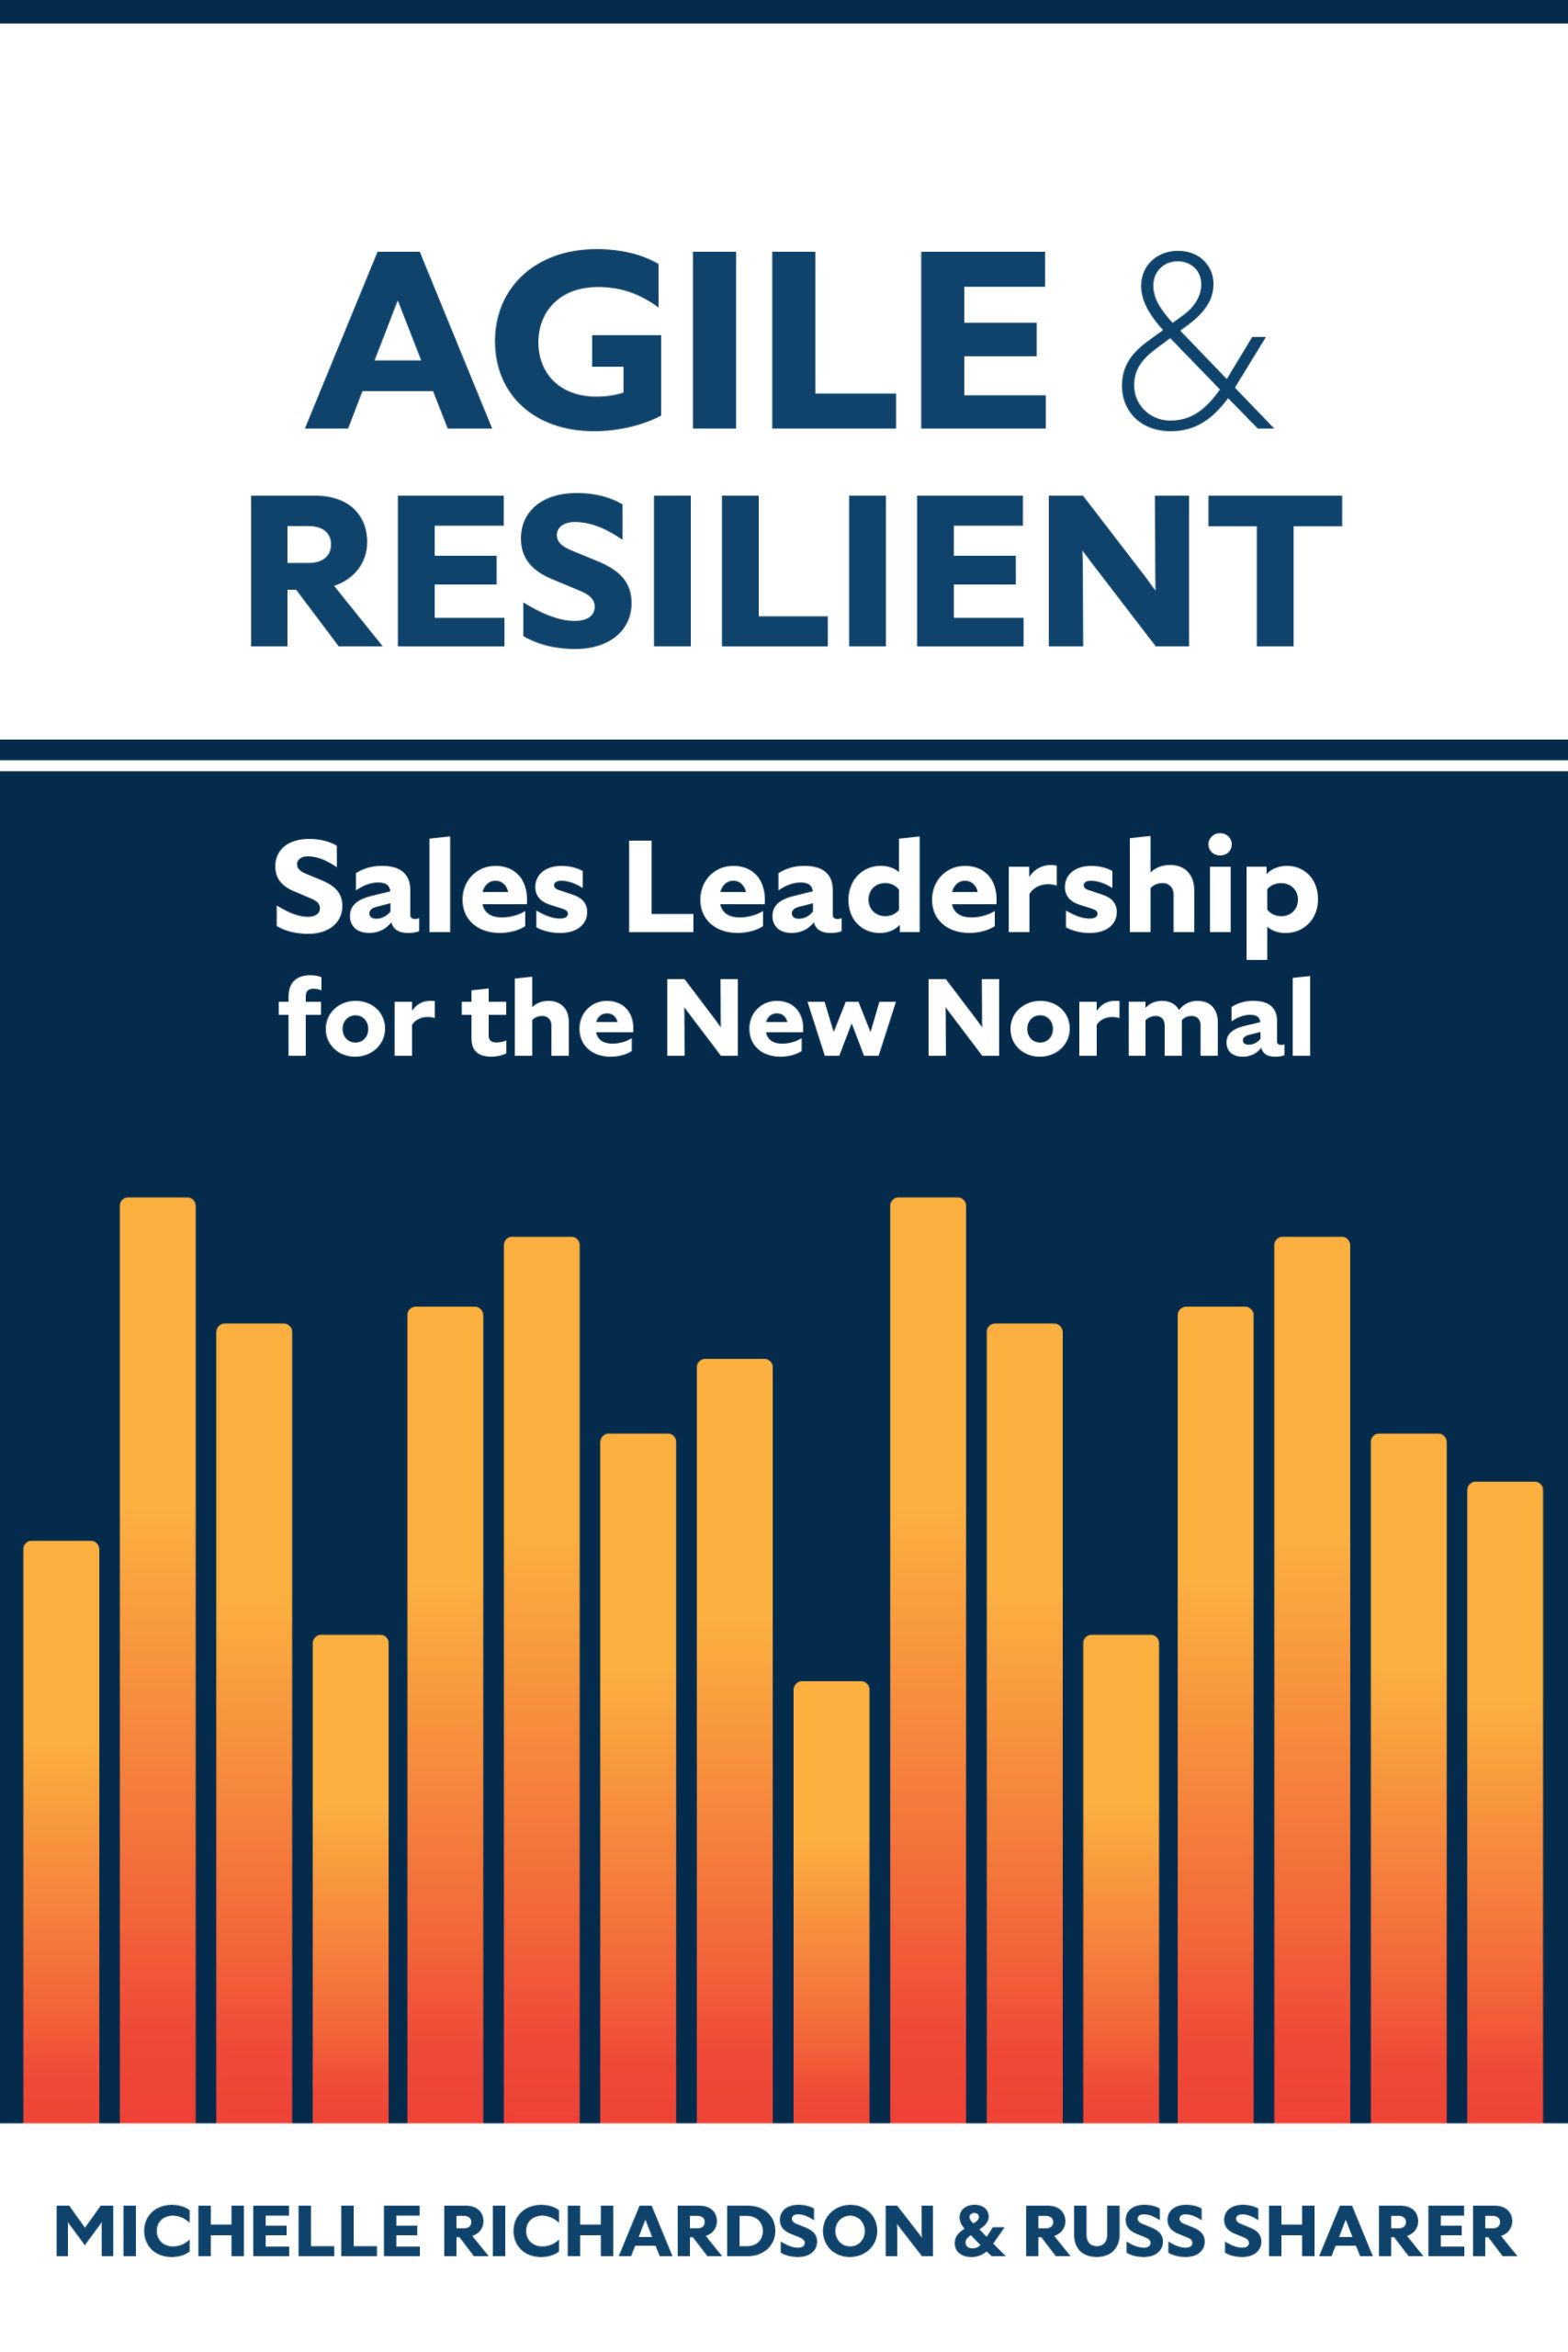 Agile & Resilient